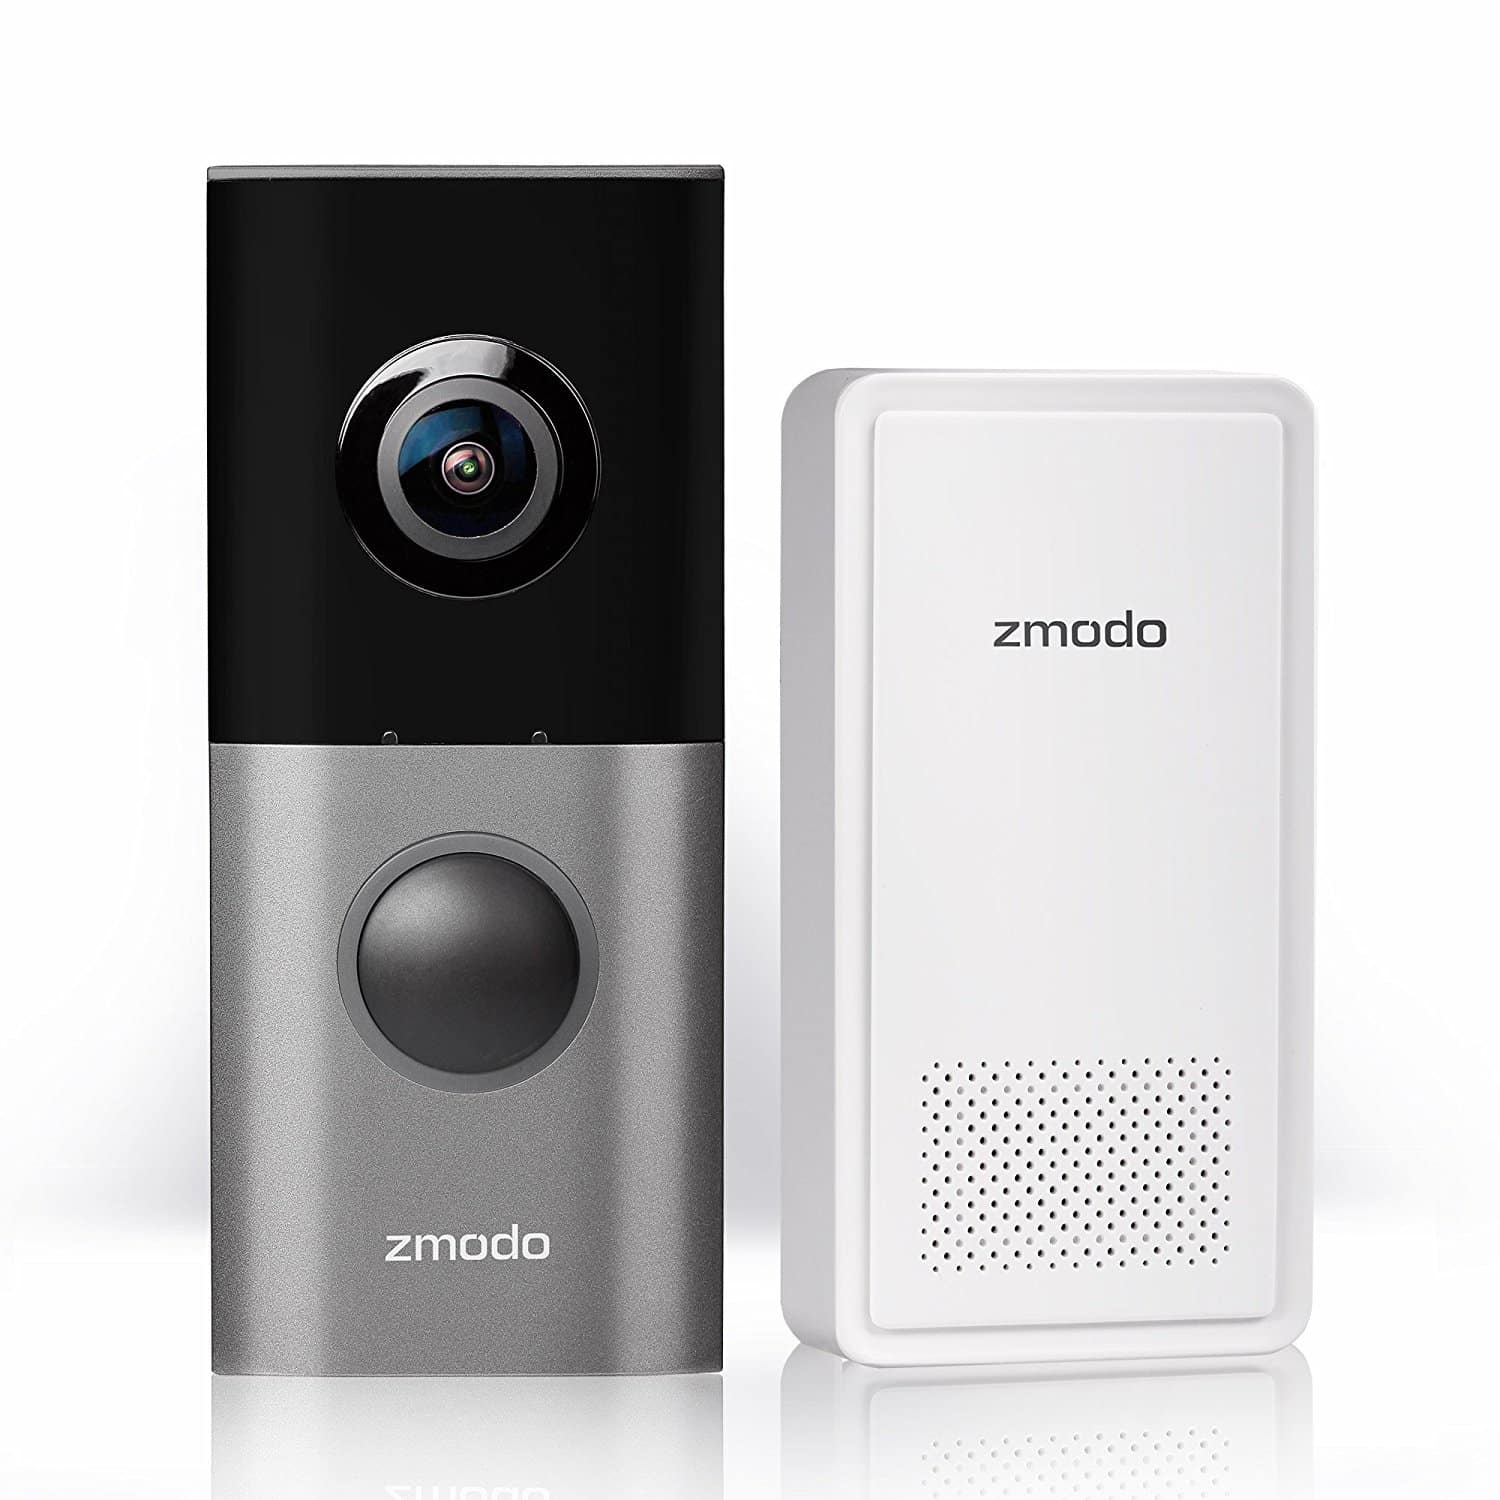 Zmodo Greet Pro - smart doorbell reviews